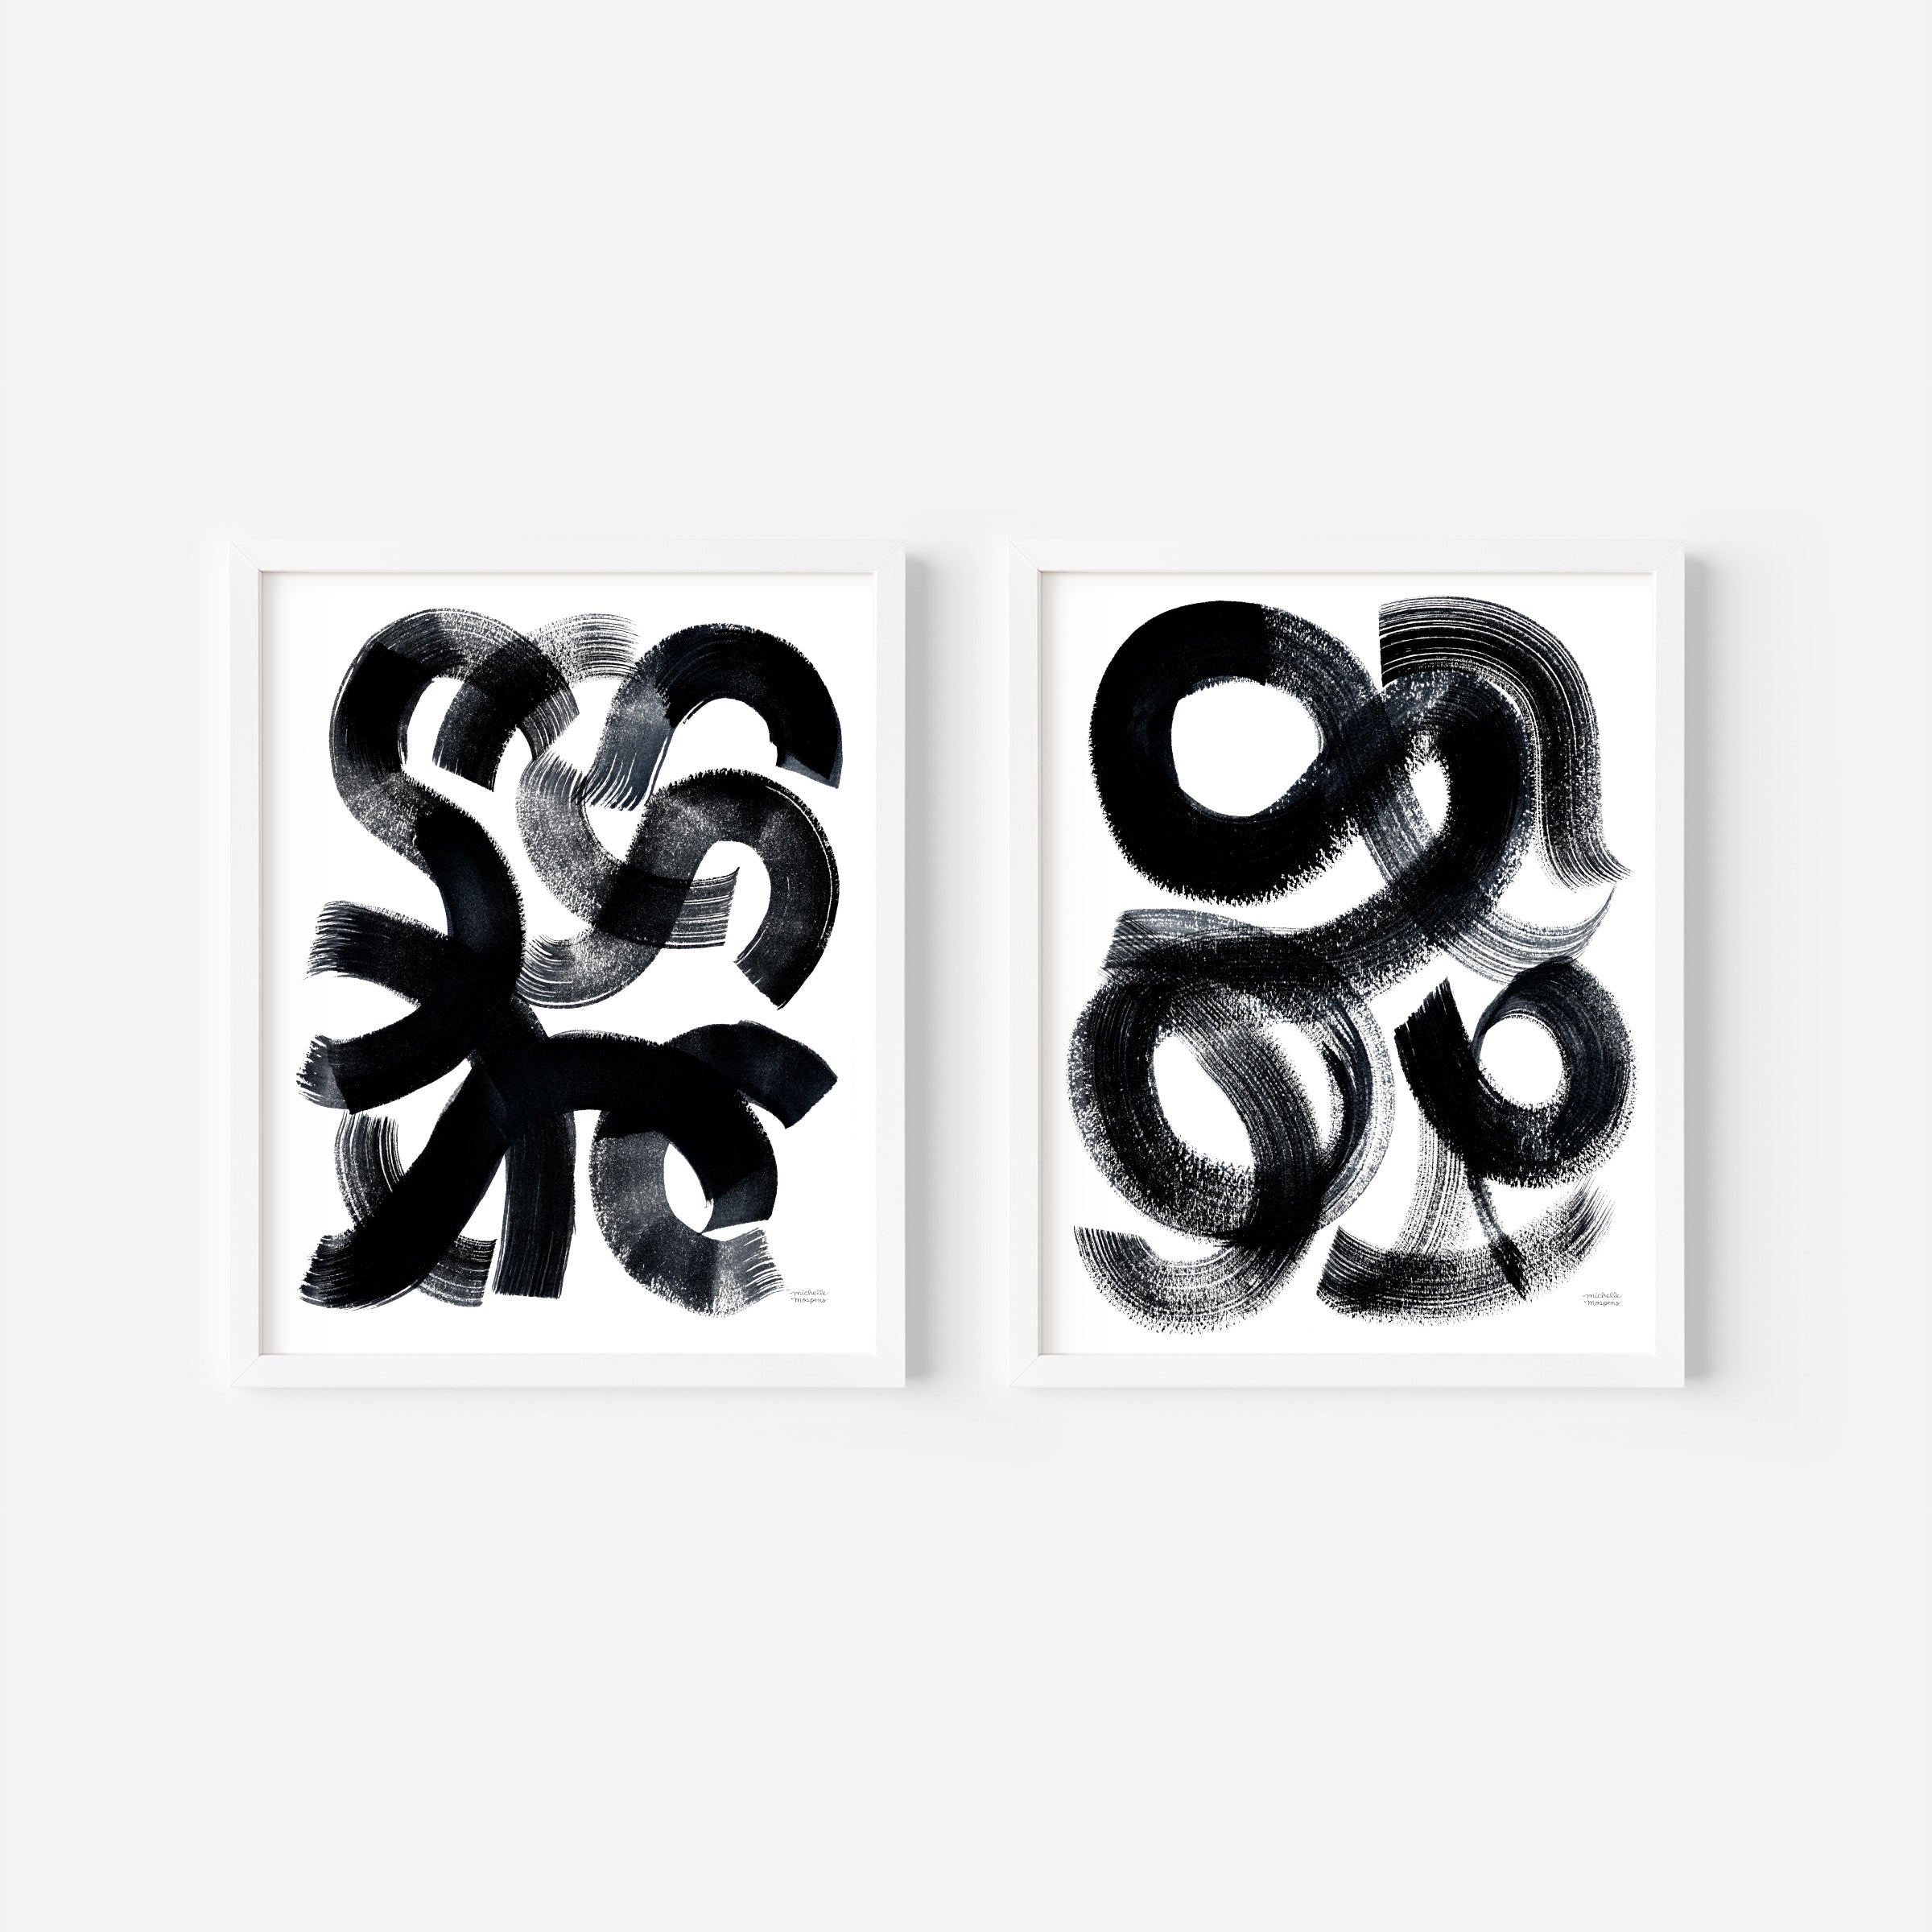 Minimalist Black and White Swirly Abstract Wall Art Prints Set Of 2 Unframed